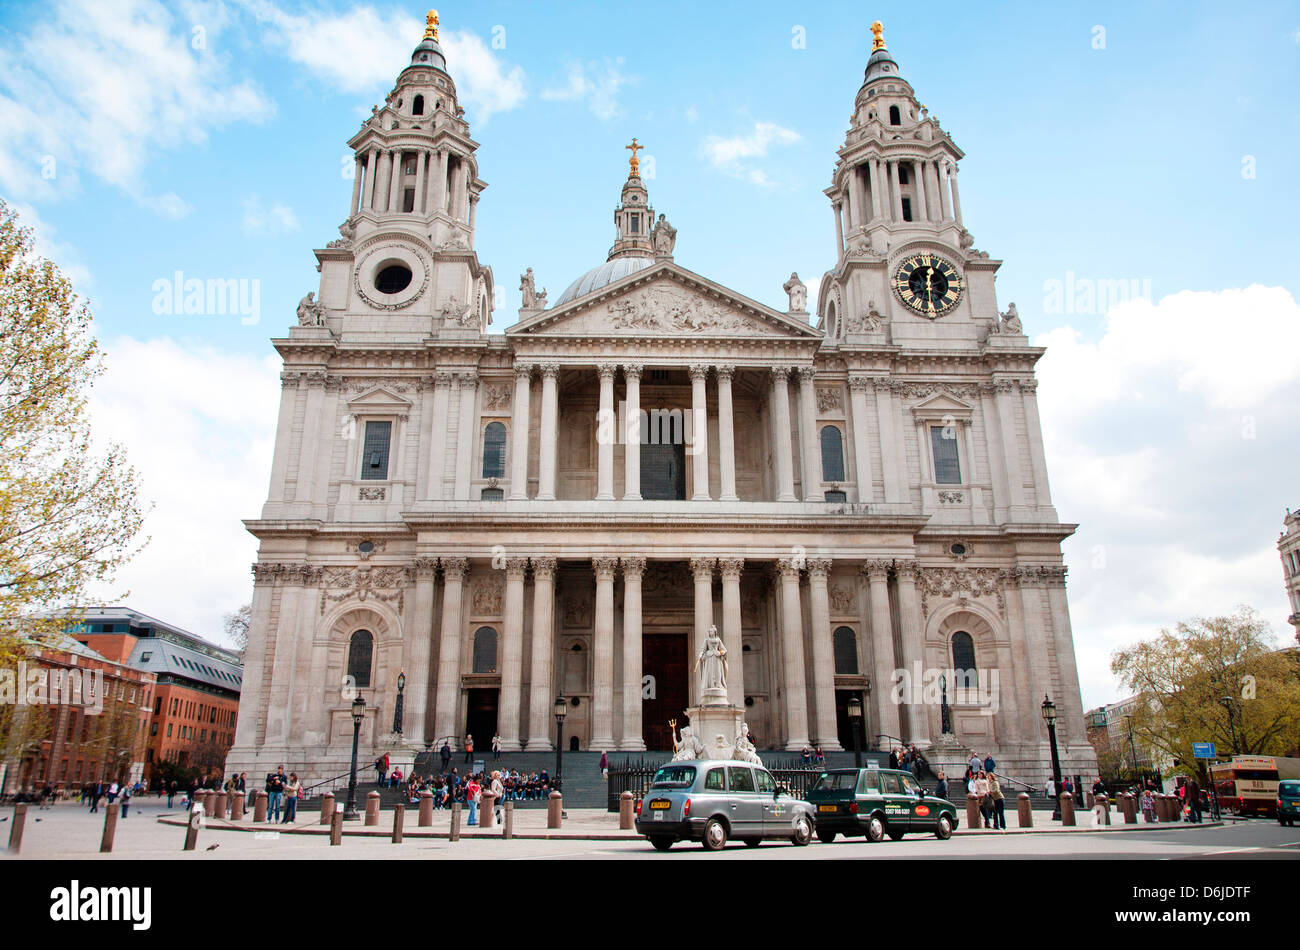 St. Paul's Cathedral entrance, London, England, United Kingdom, Europe Stock Photo